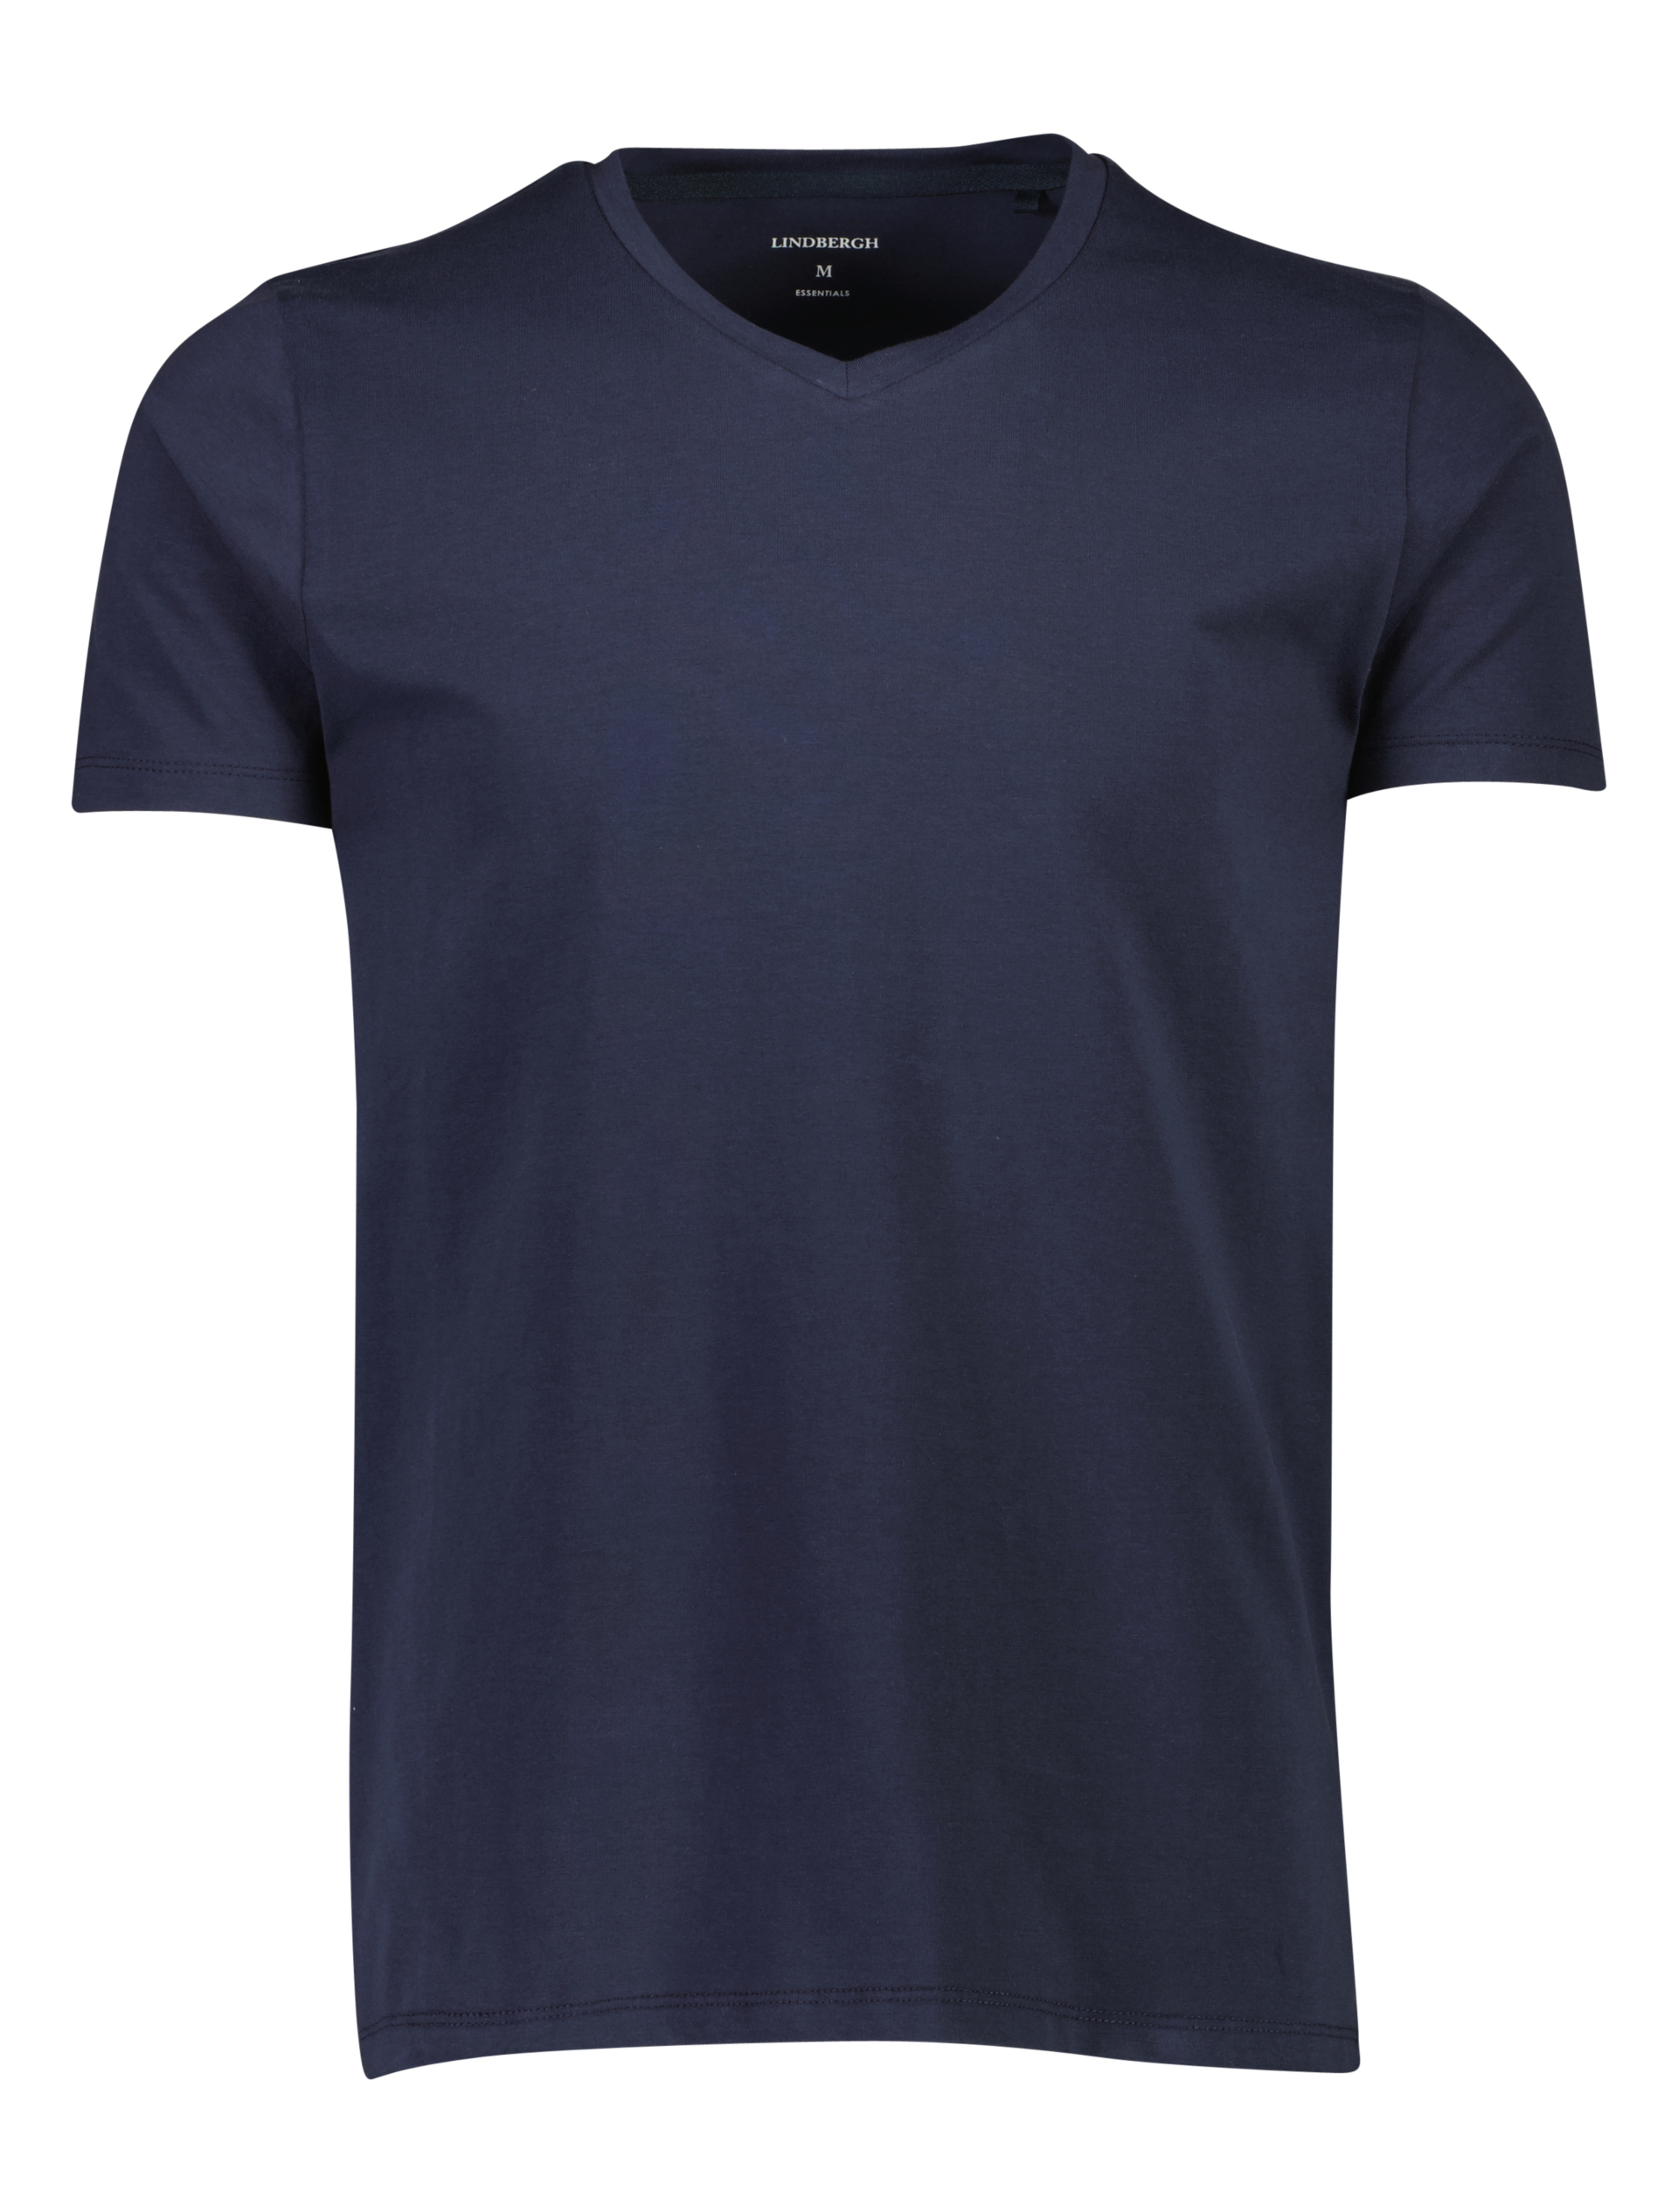 Lindbergh T-shirt blauw / navy